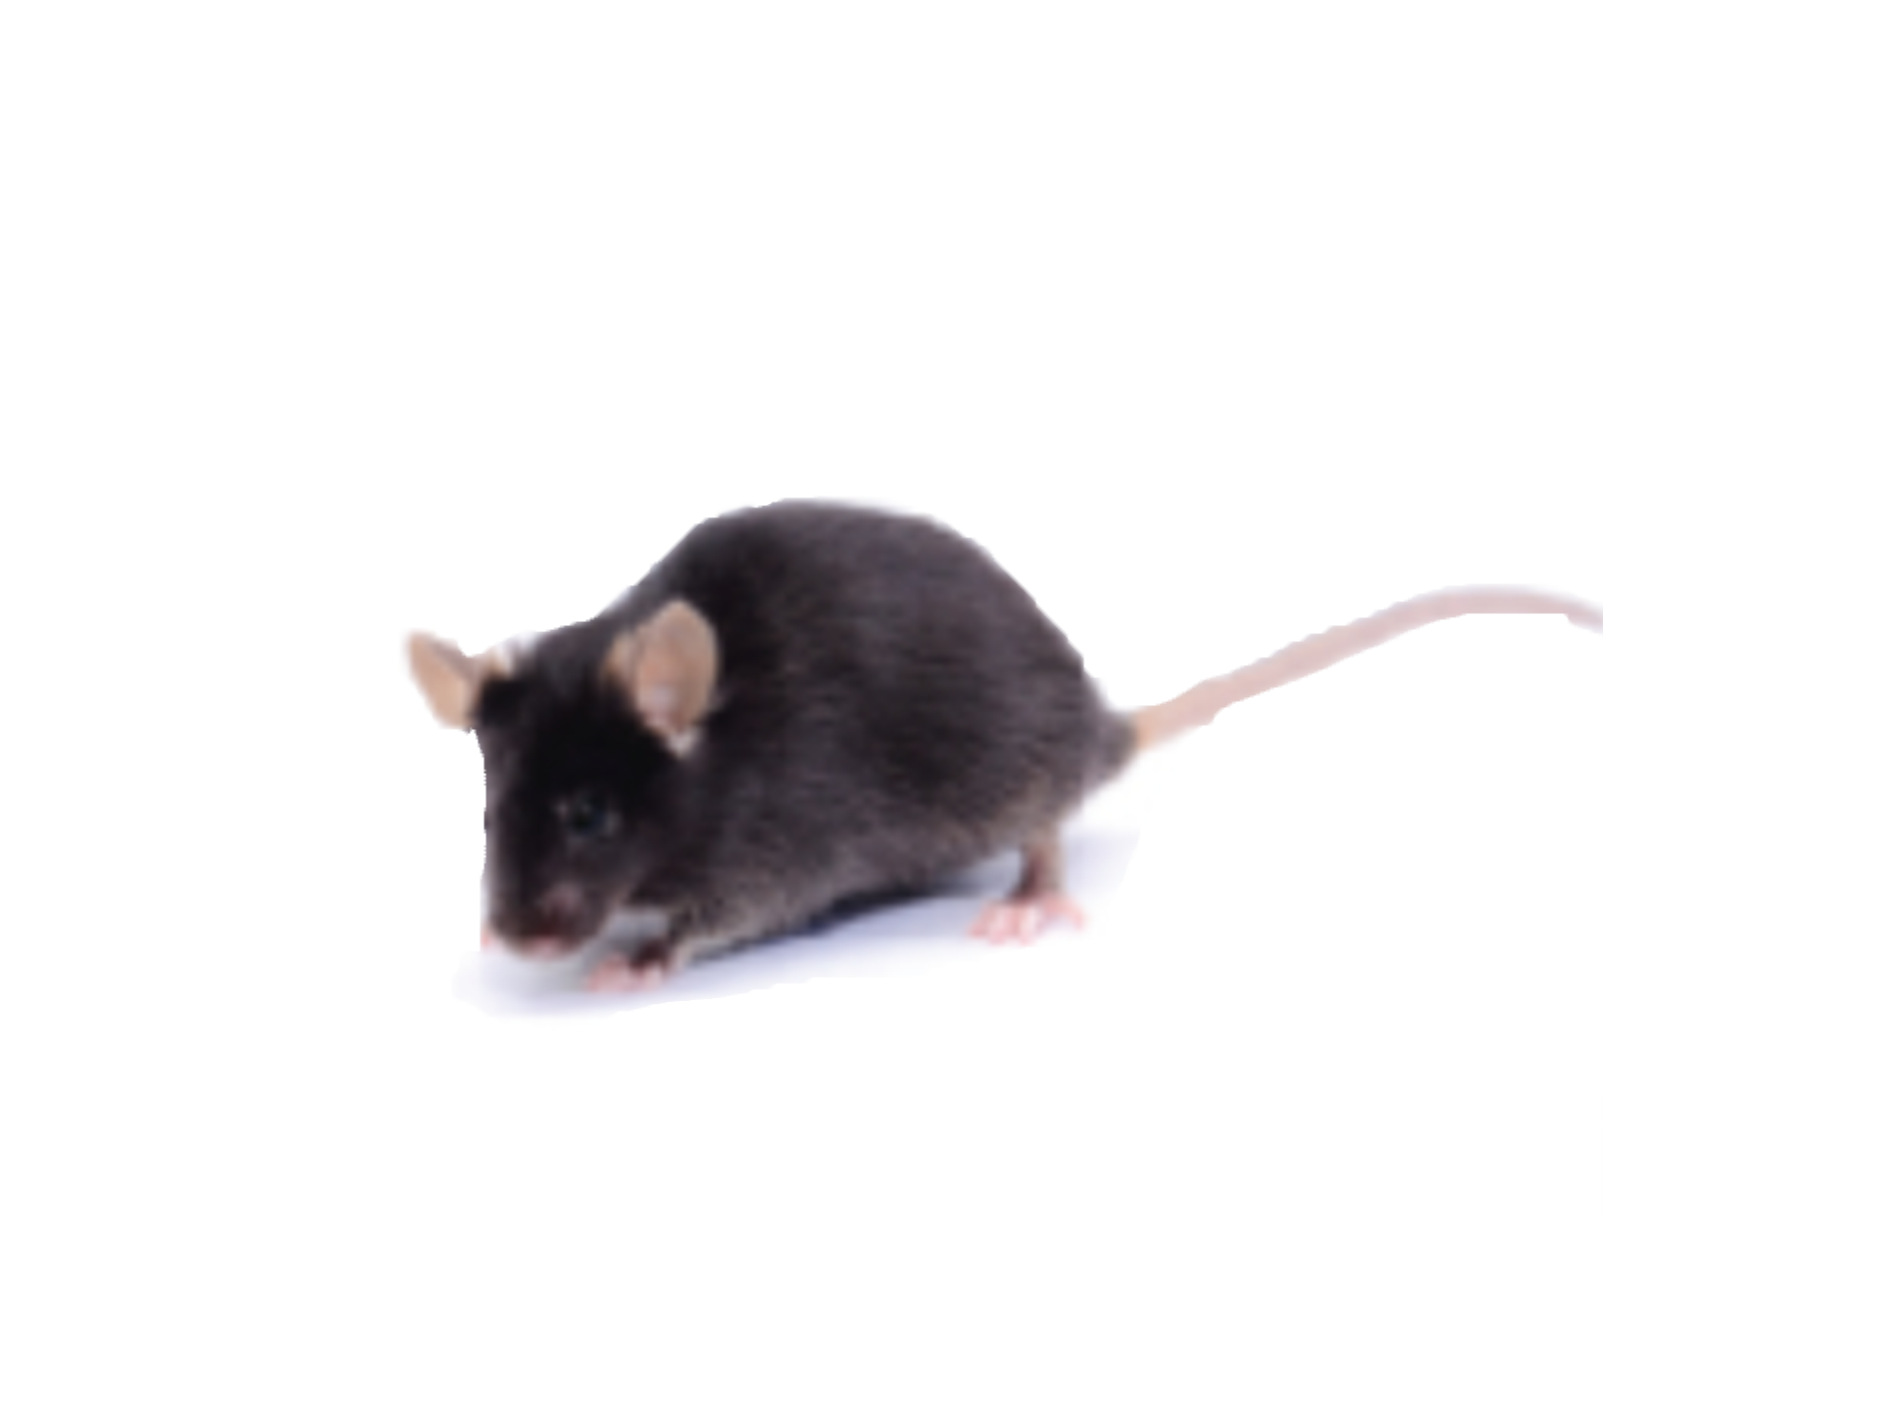 C57BL/6N Mice